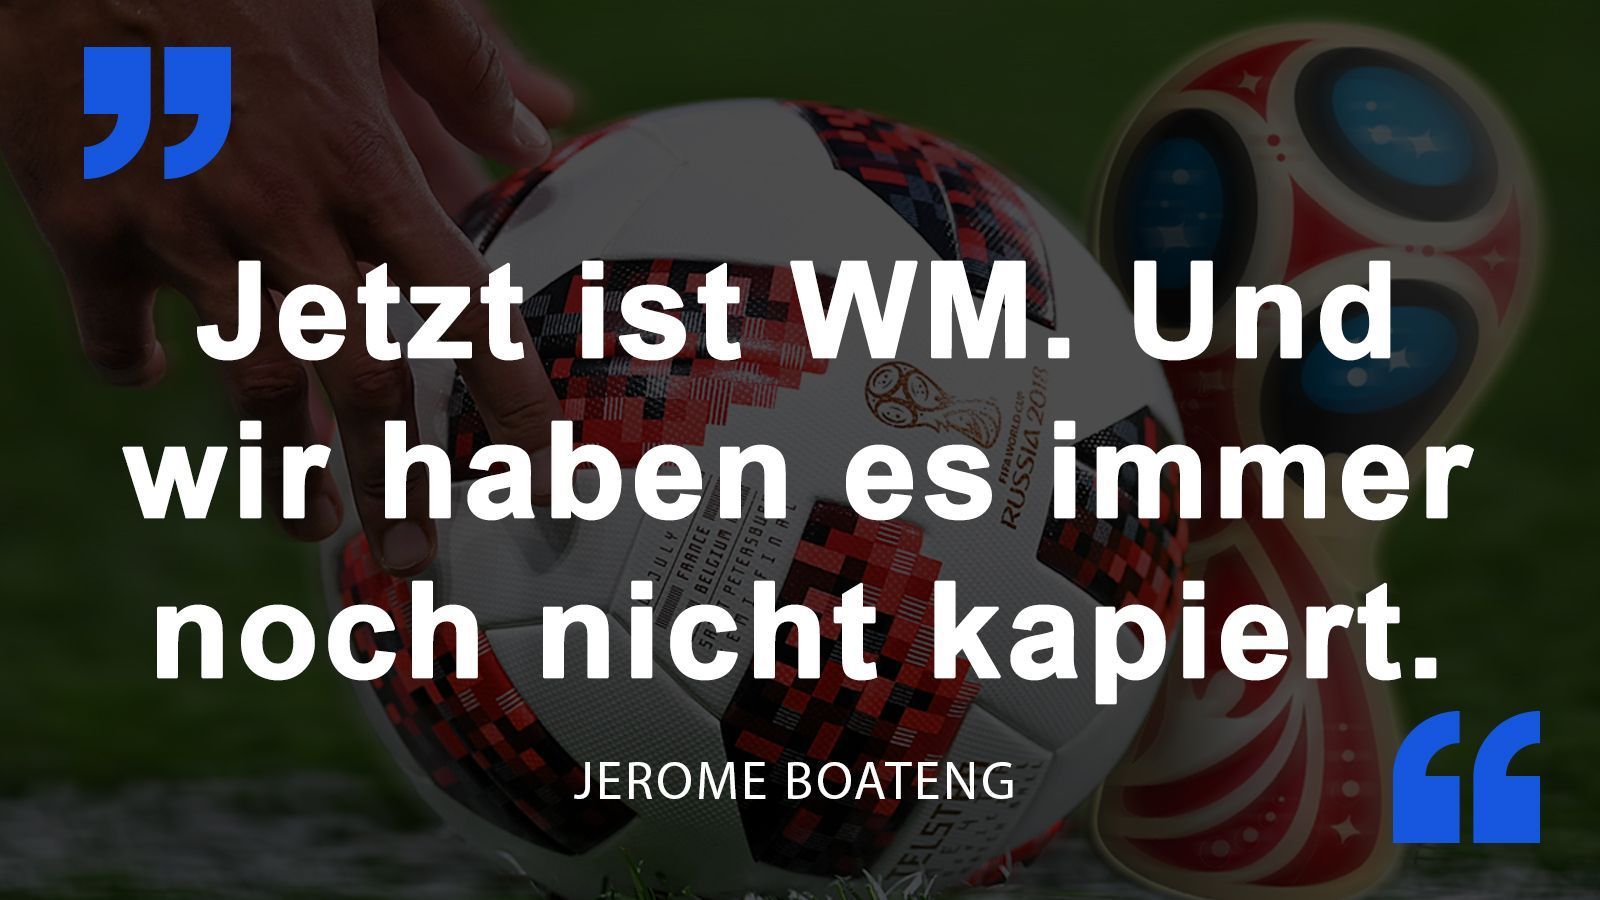 
                <strong>Jerome Boateng</strong><br>
                DFB-Verteidiger Jerome Boateng nach der Pleite im Auftaktmatch gegen Mexiko.
              